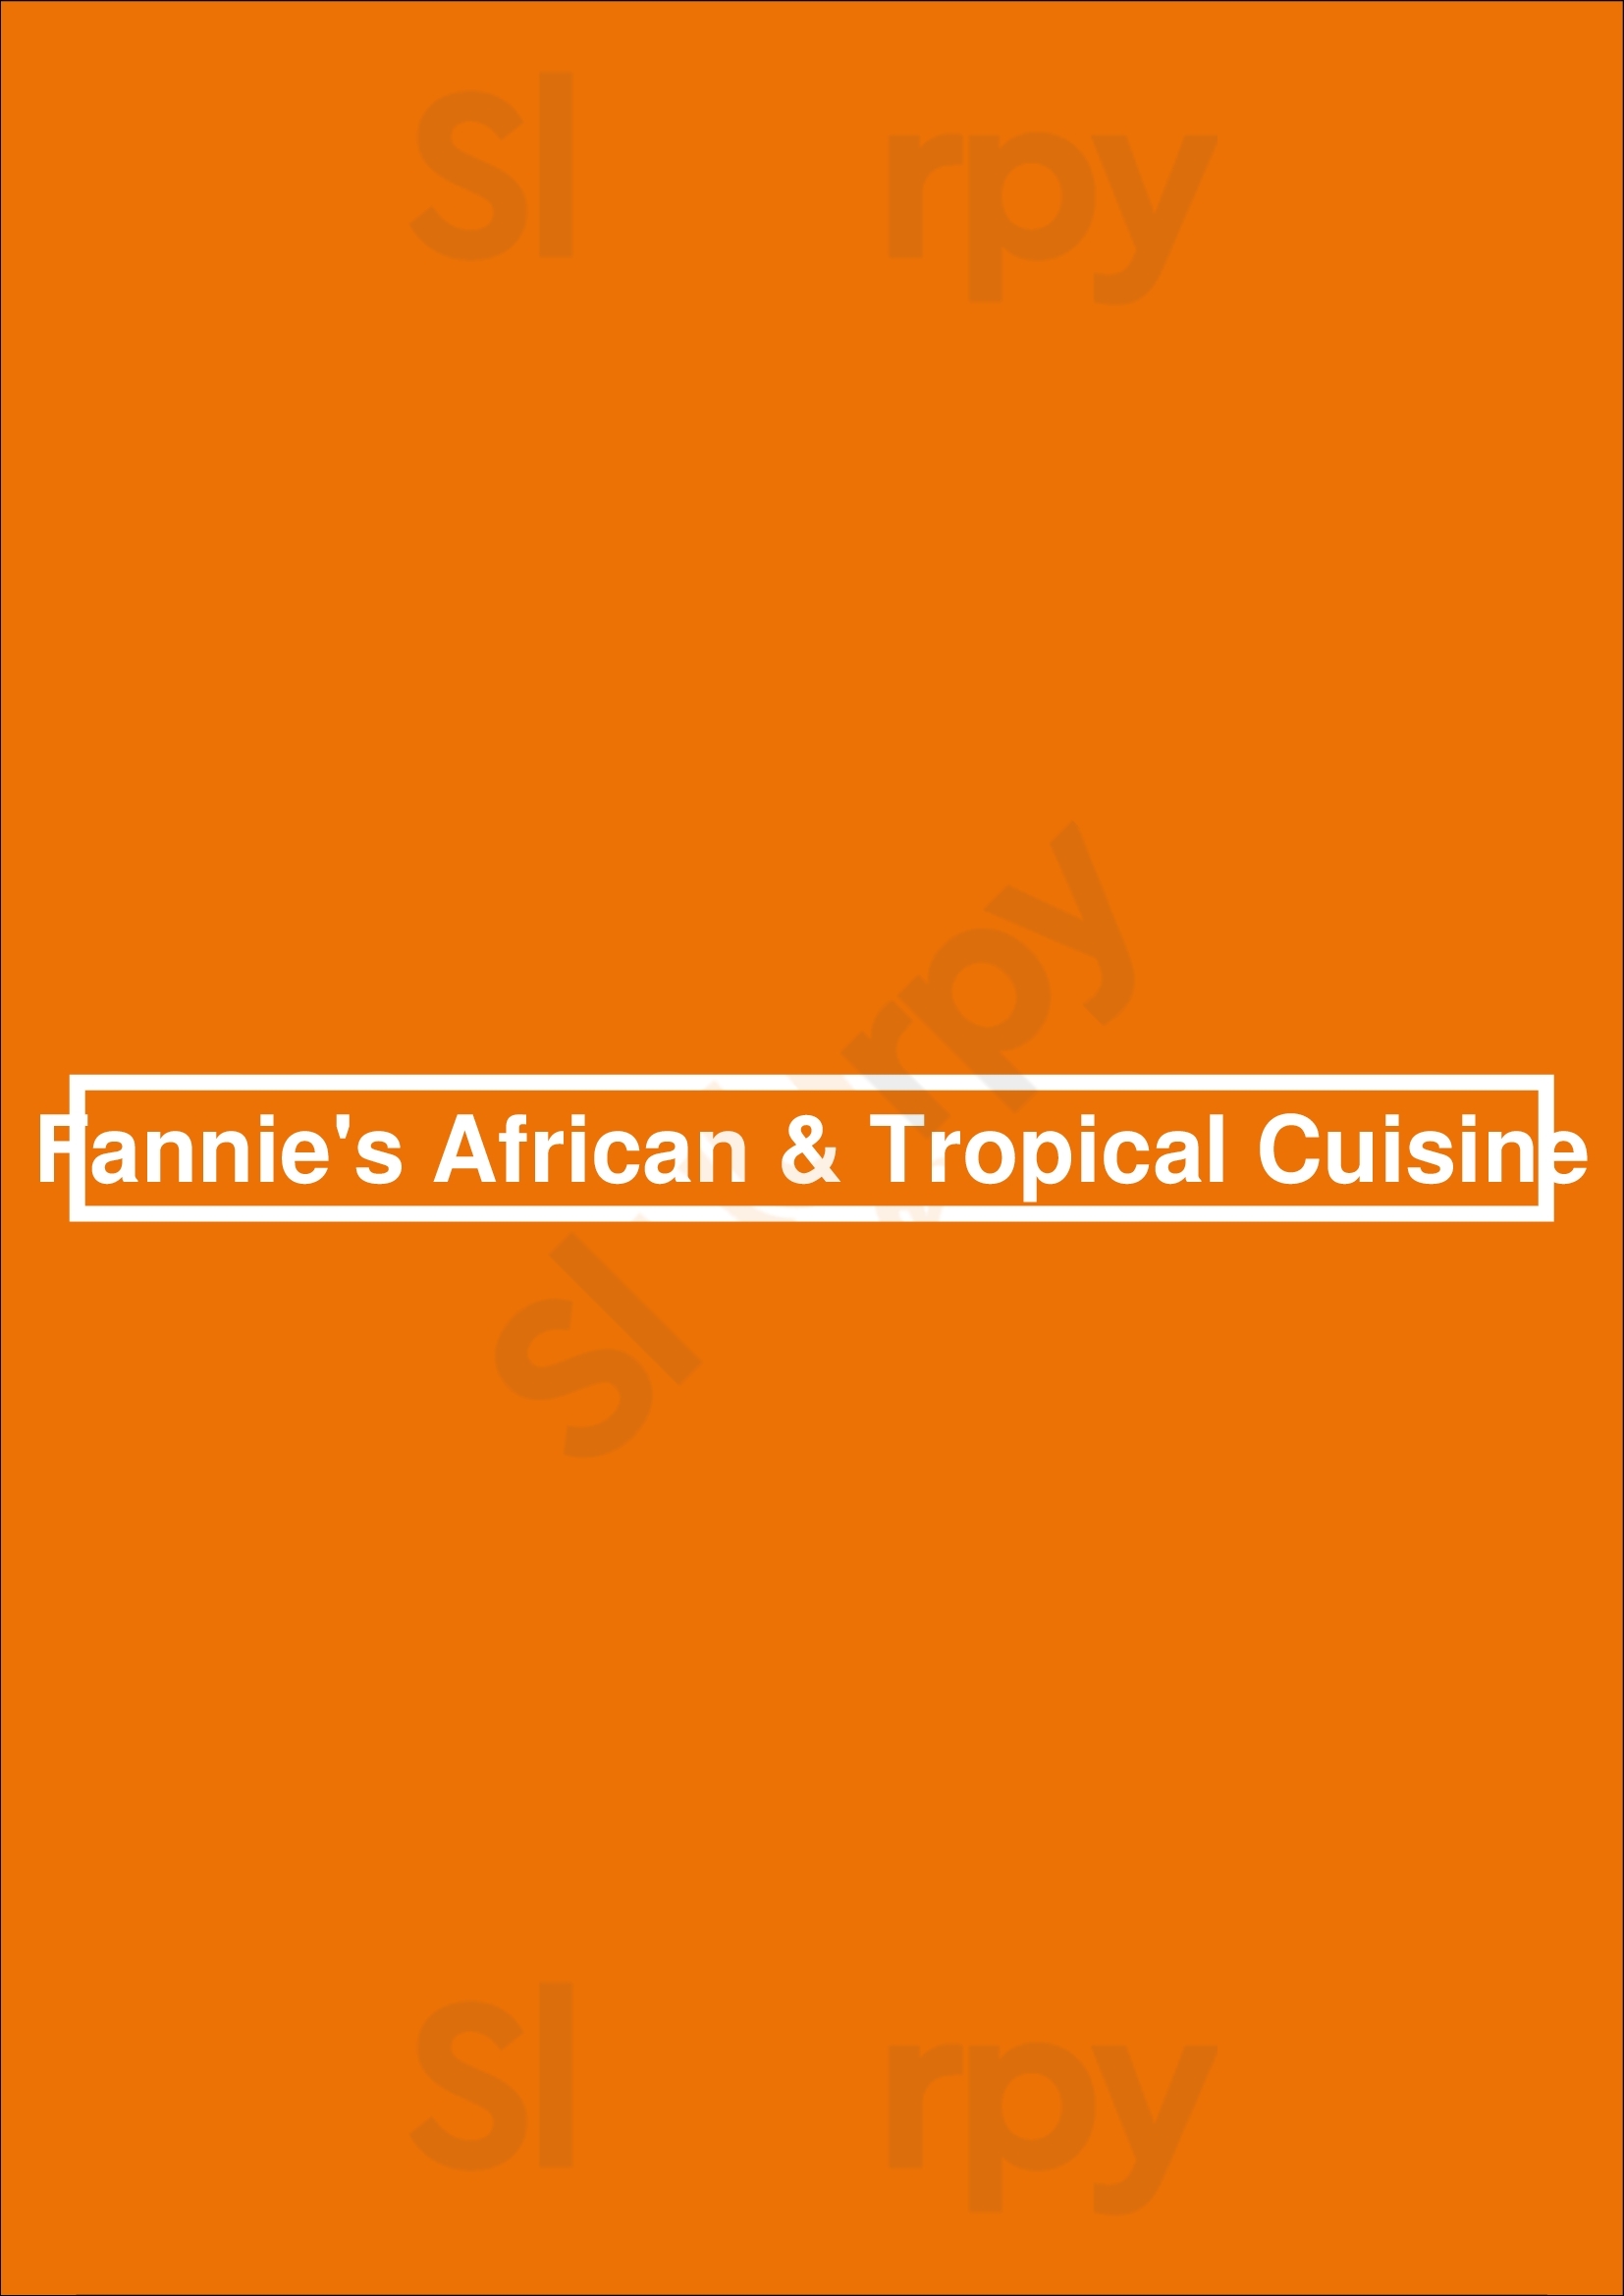 Fannie's African & Tropical Cuisine Kansas City Menu - 1